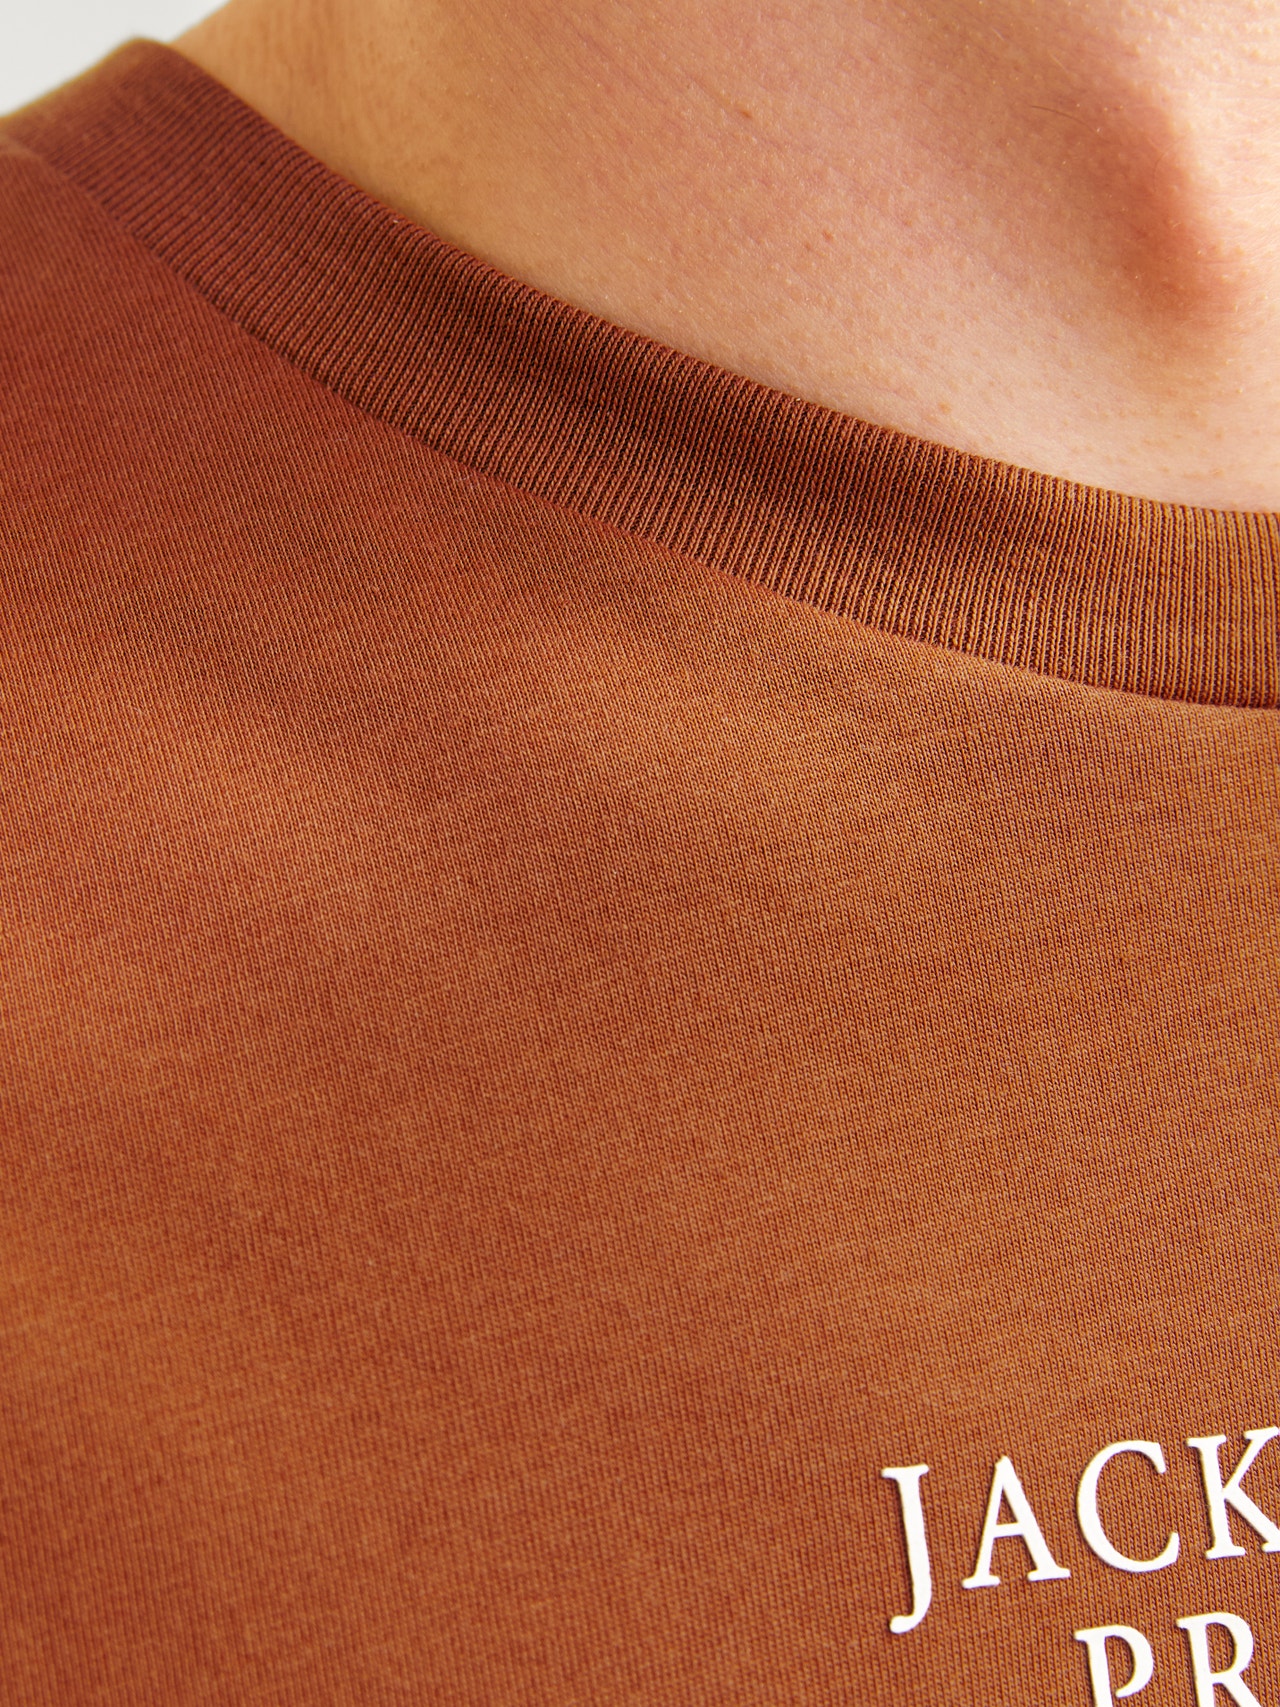 Jack & Jones Camiseta Logotipo Cuello redondo -Mocha Bisque - 12217167